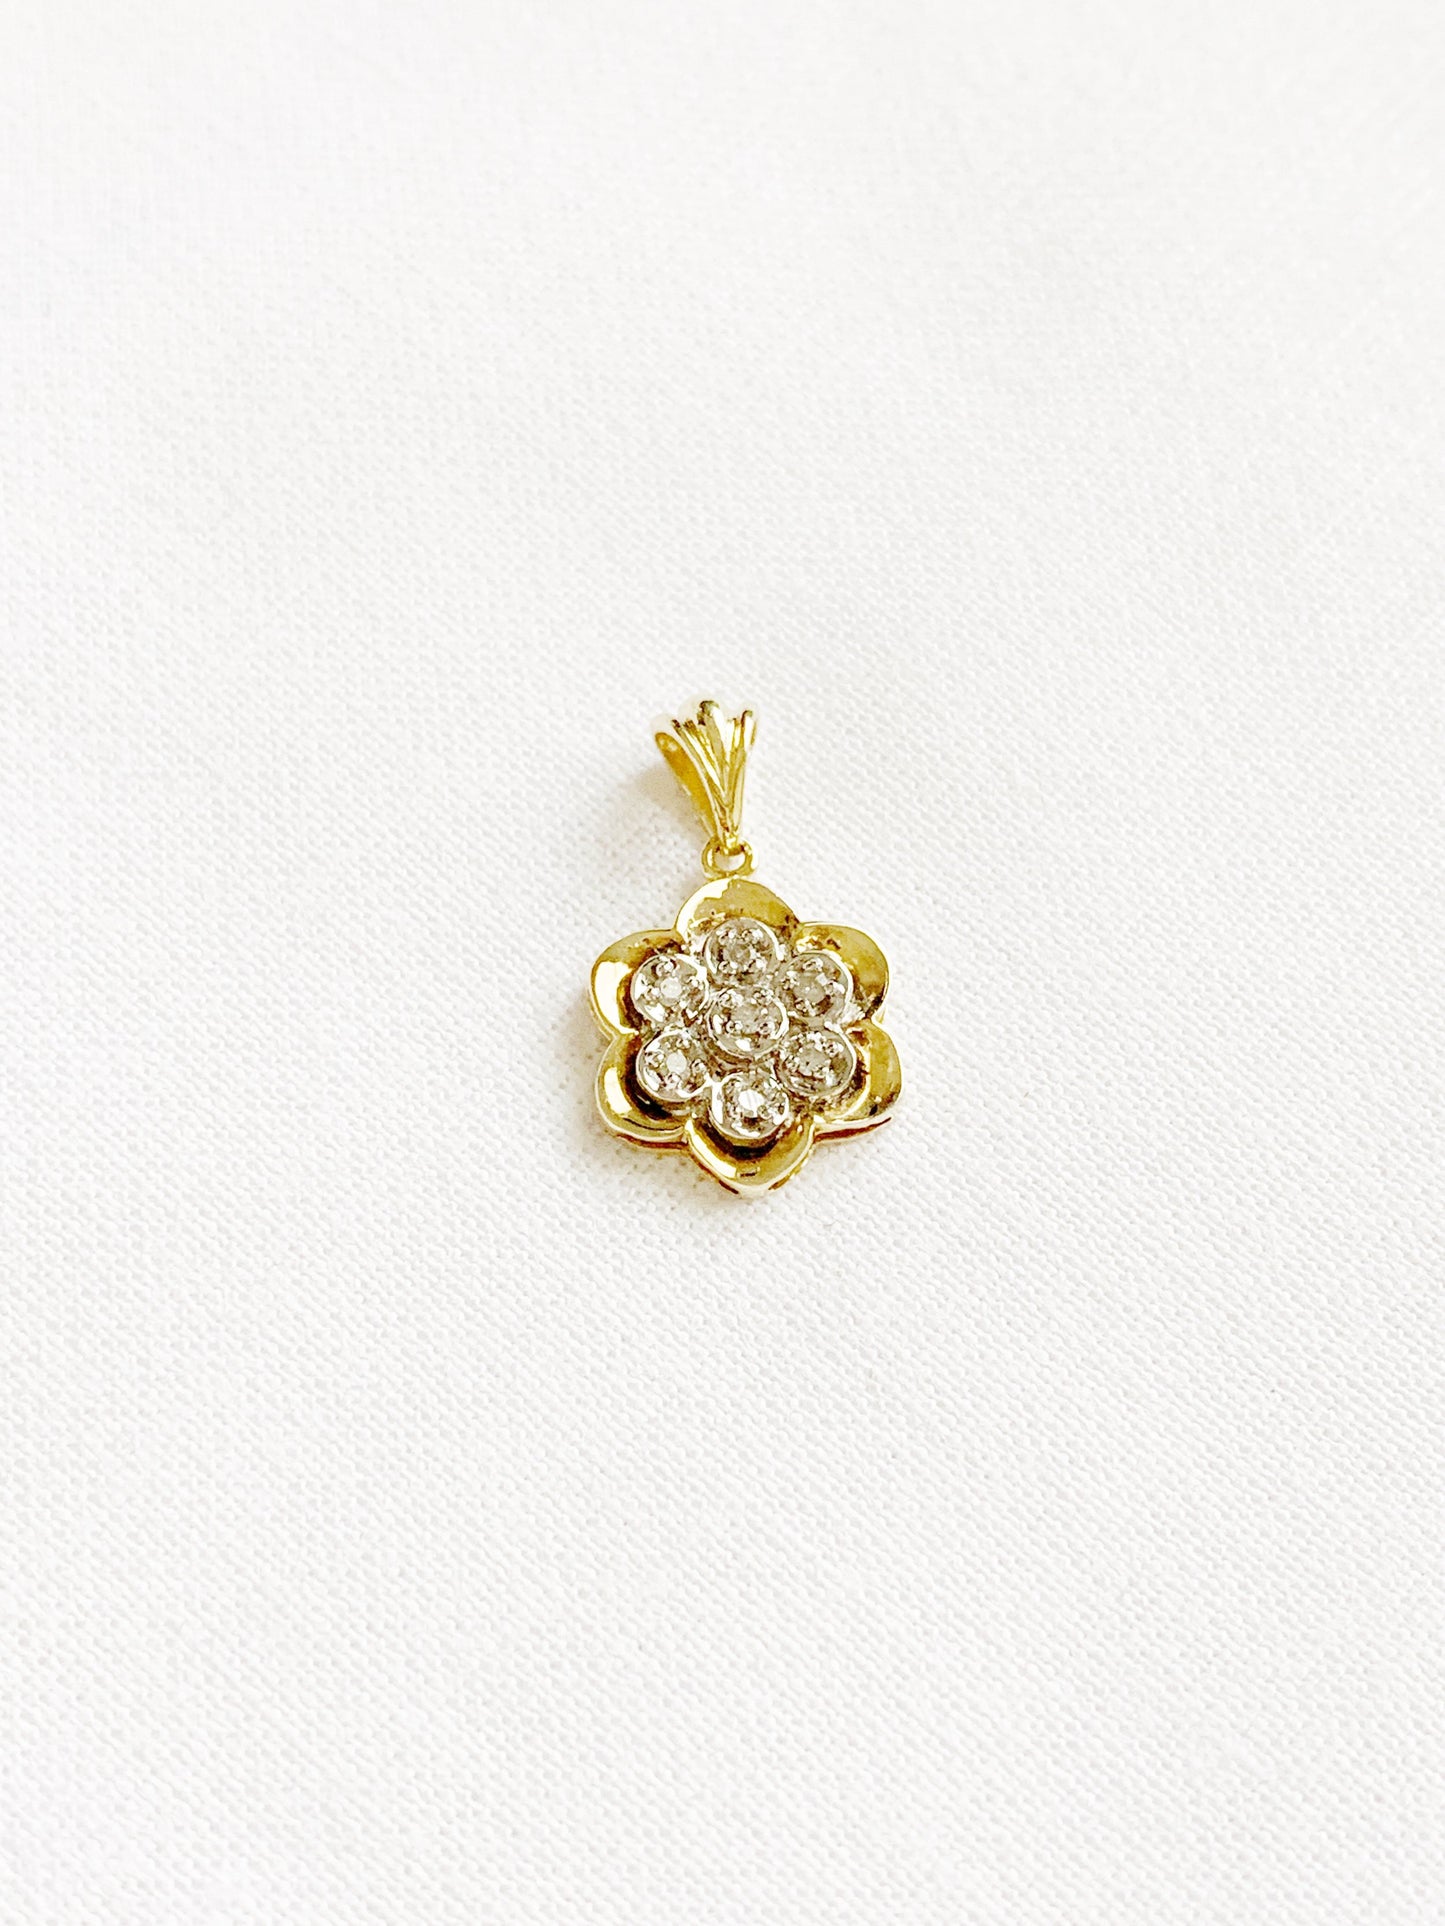 Vintage 9ct Gold and Diamond Flower Pendant